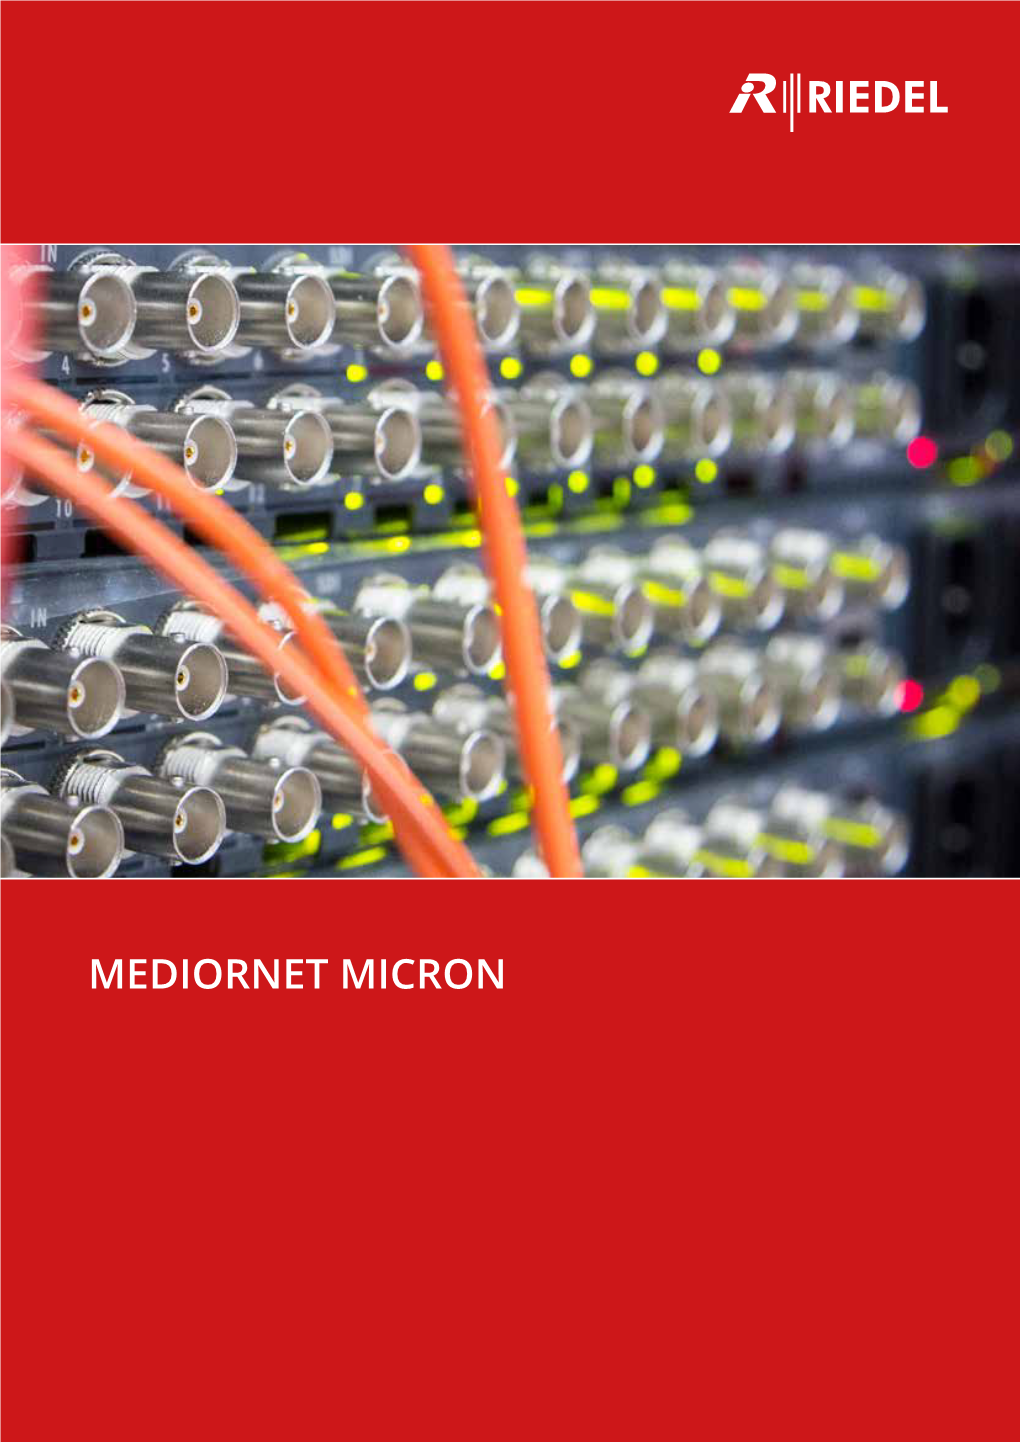 MEDIORNET MICRON Micron Member of the Mediornet Family